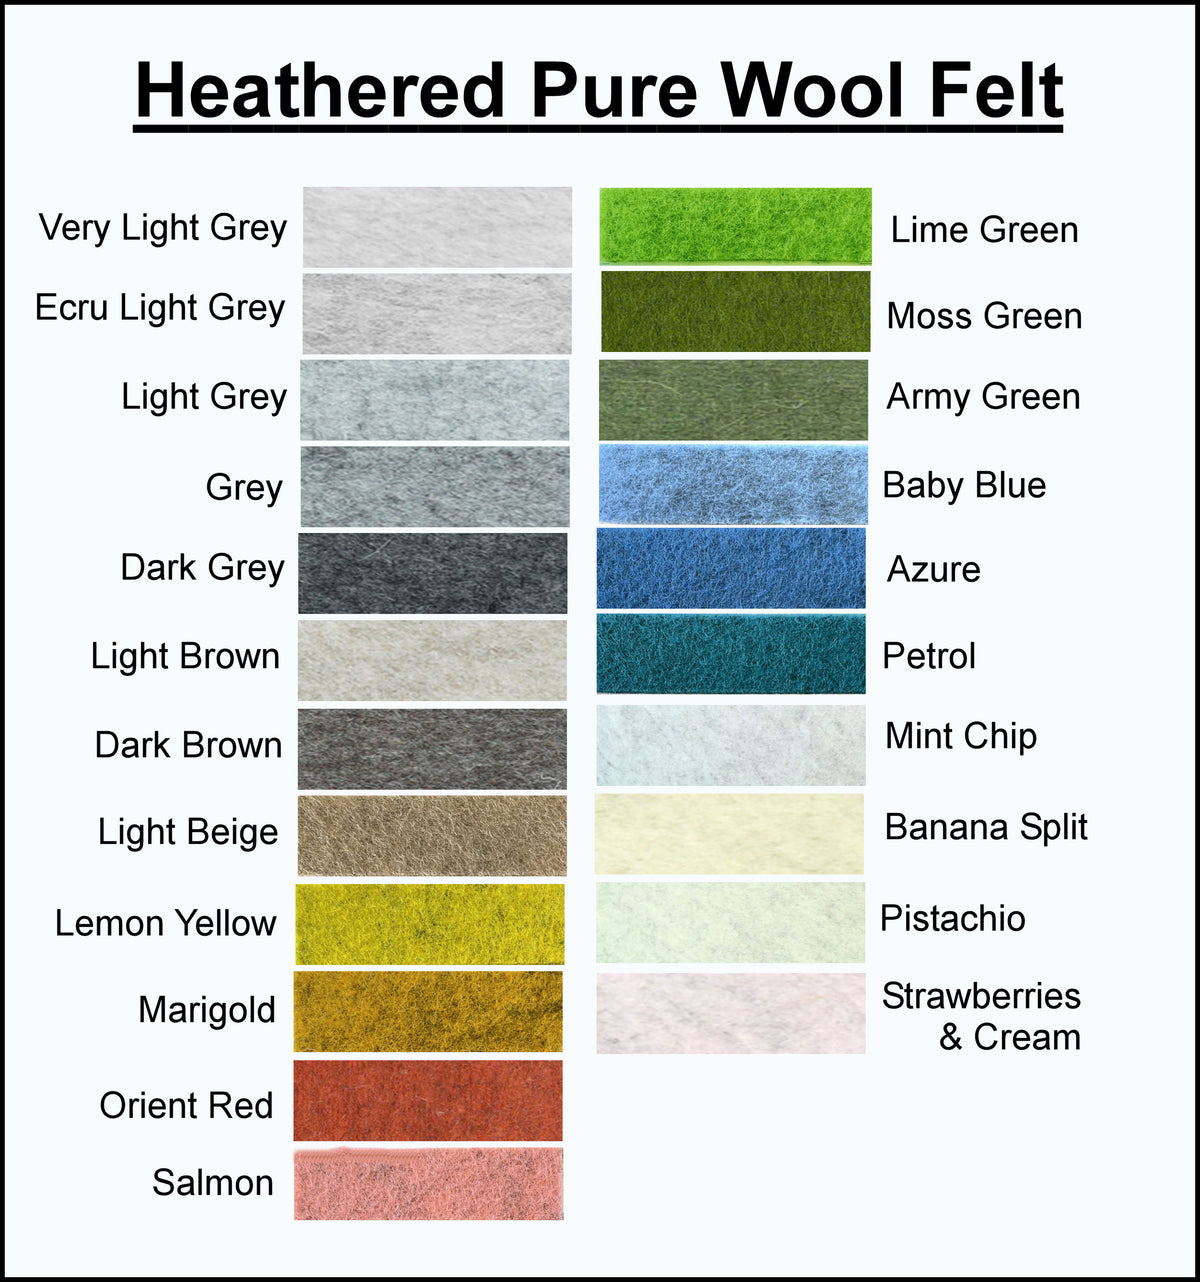 Pure Wool Felt - Heathered Felt Australian Merino Wool - Choose your own color - 25cm x 90cm